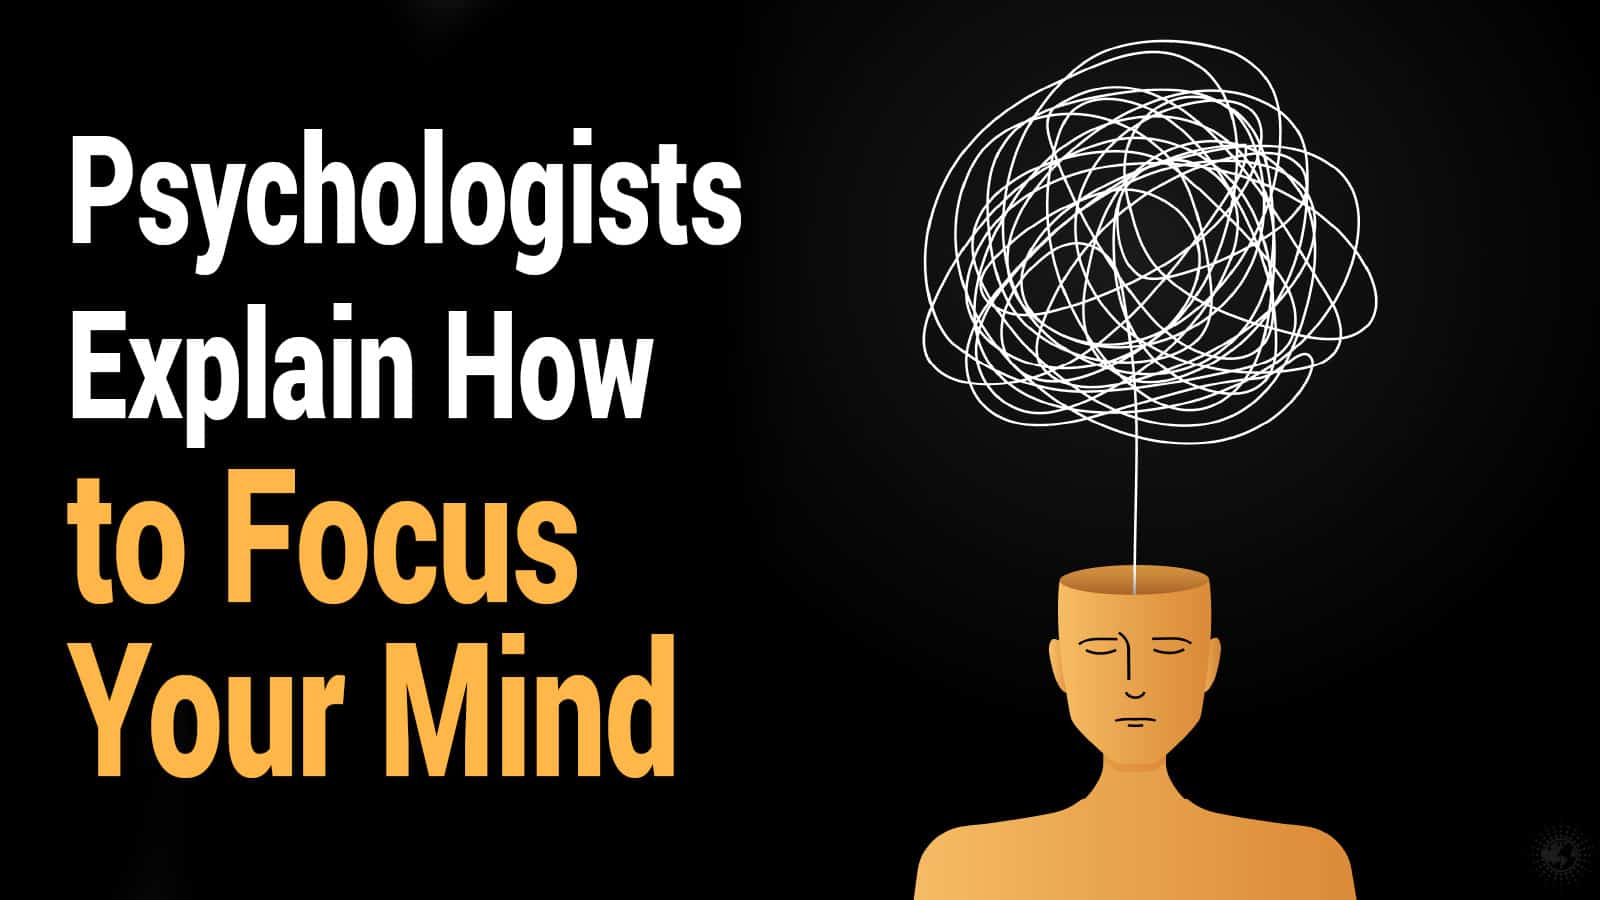 Psychologists Explain How to Focus Your Mind